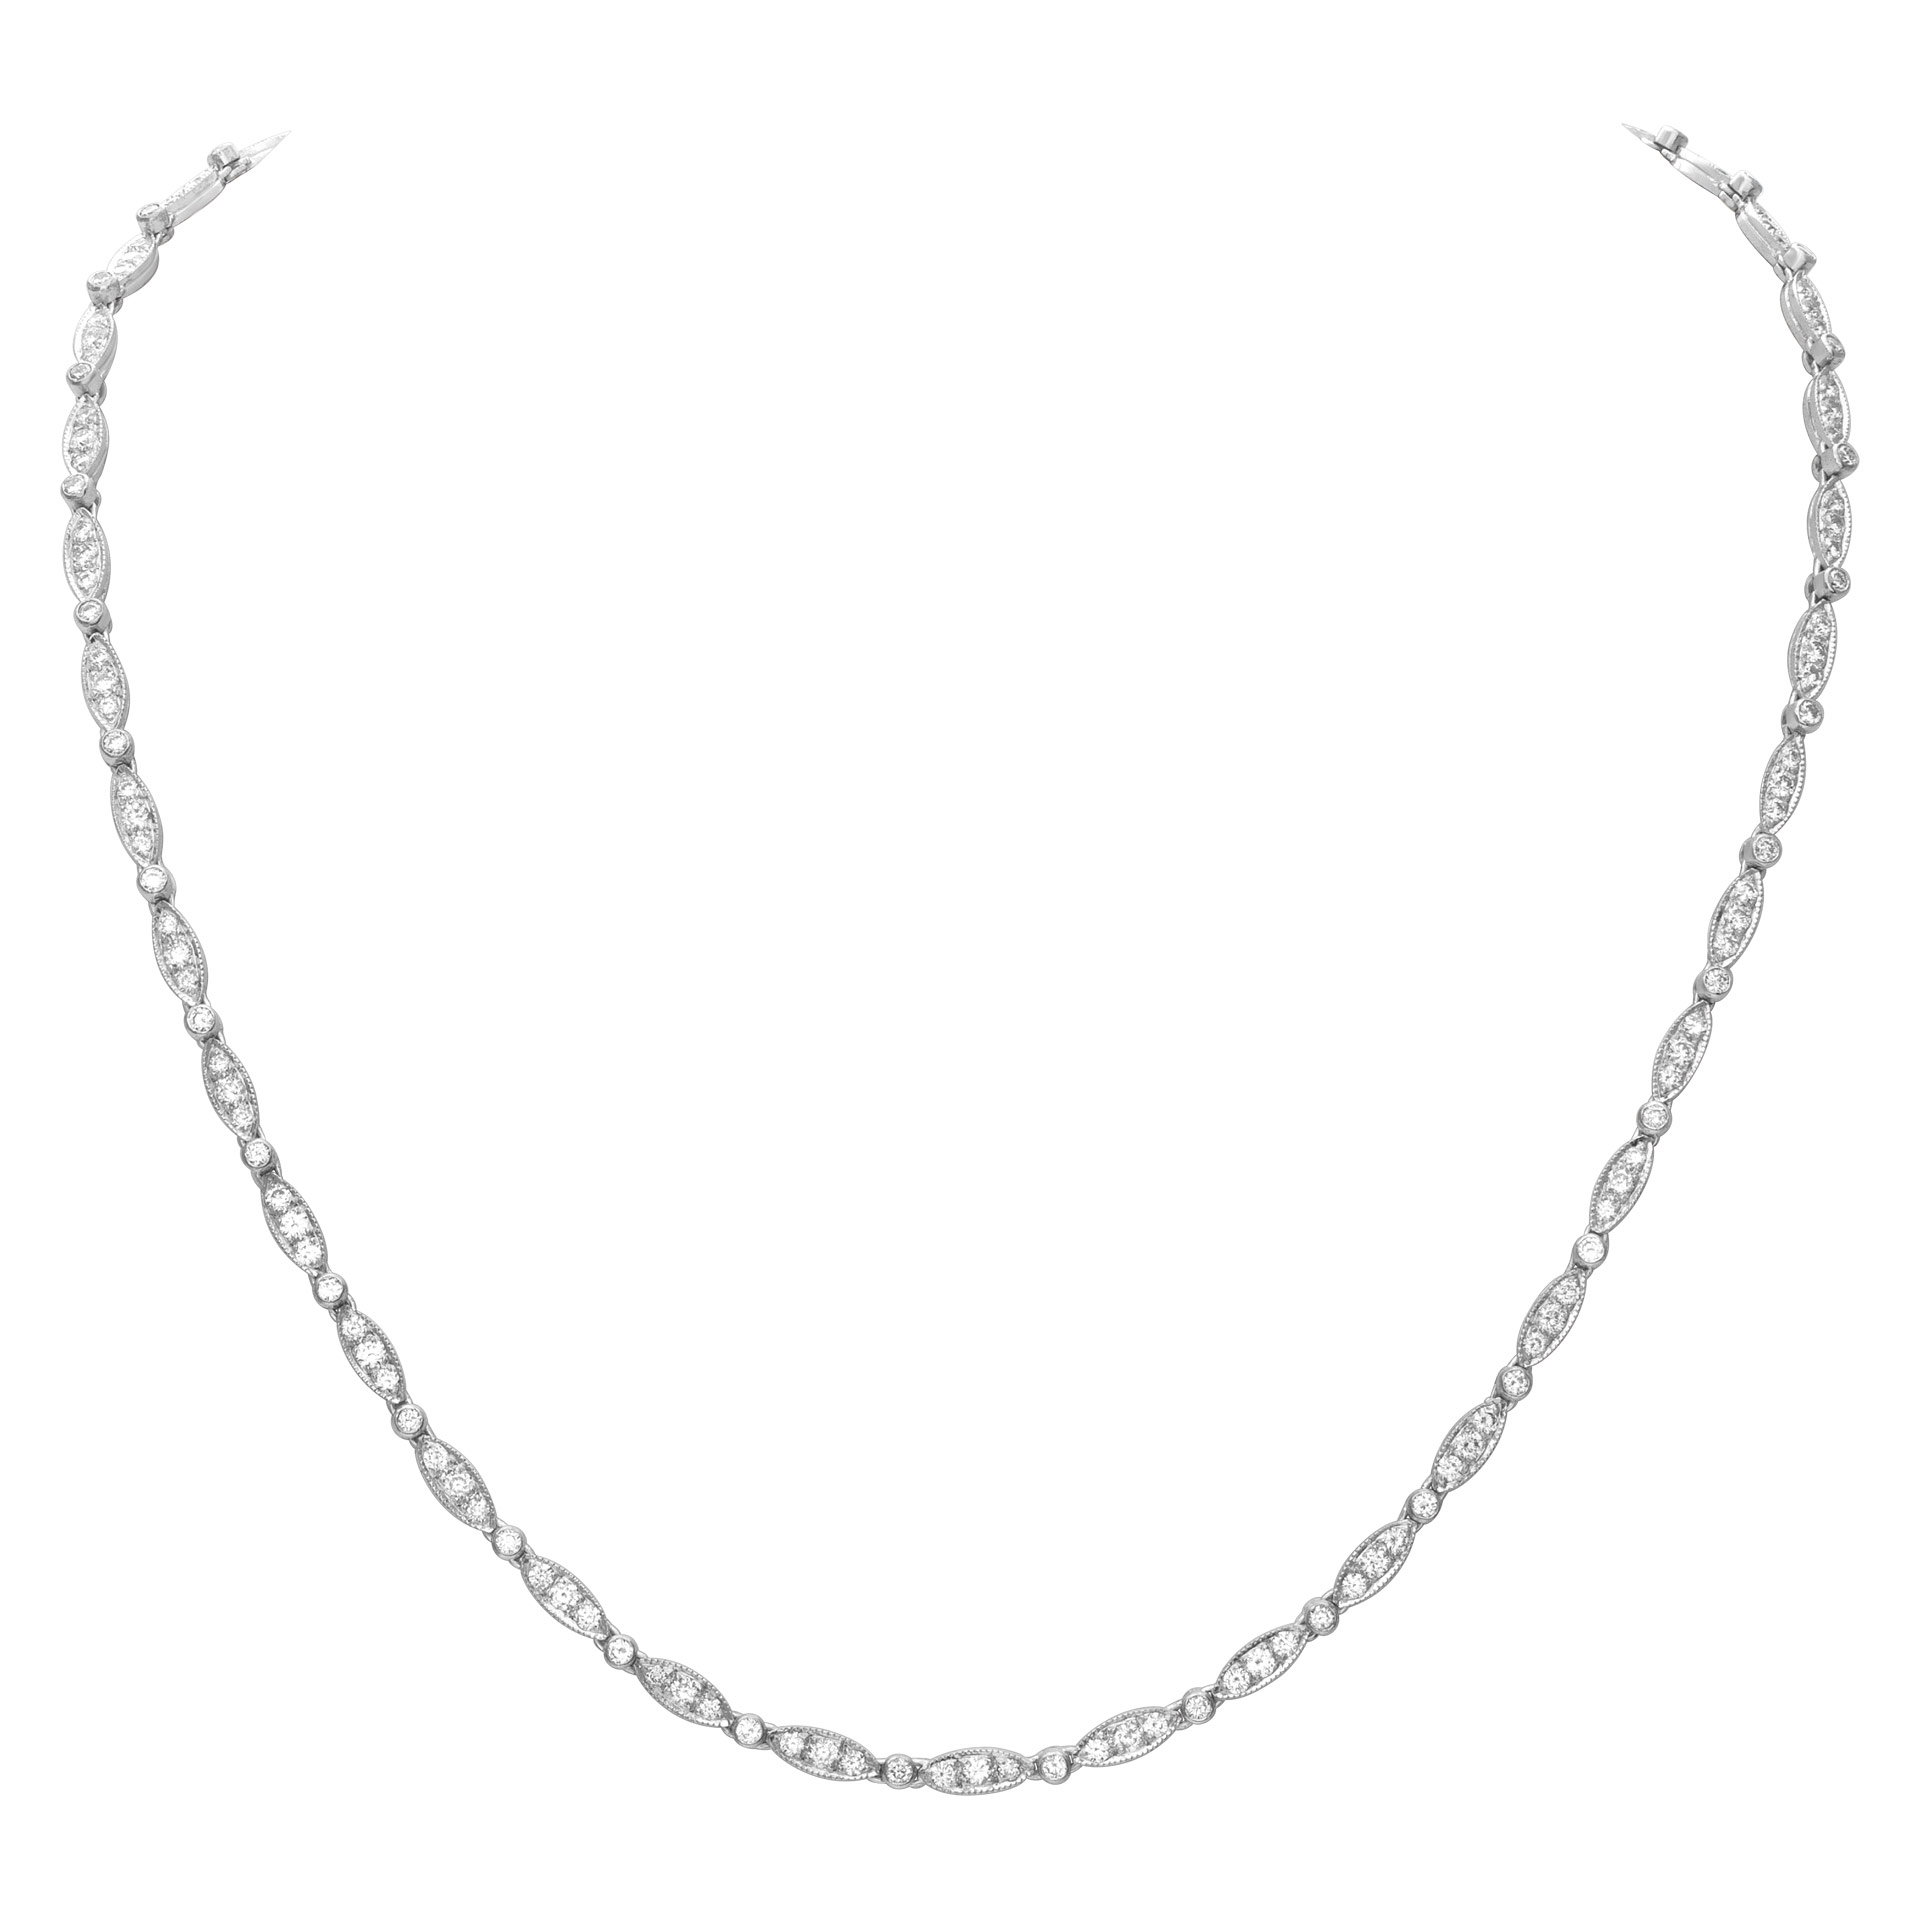 Diamond necklace in 18k white gold,  over 2 carats round brilliant cut diamonds image 1